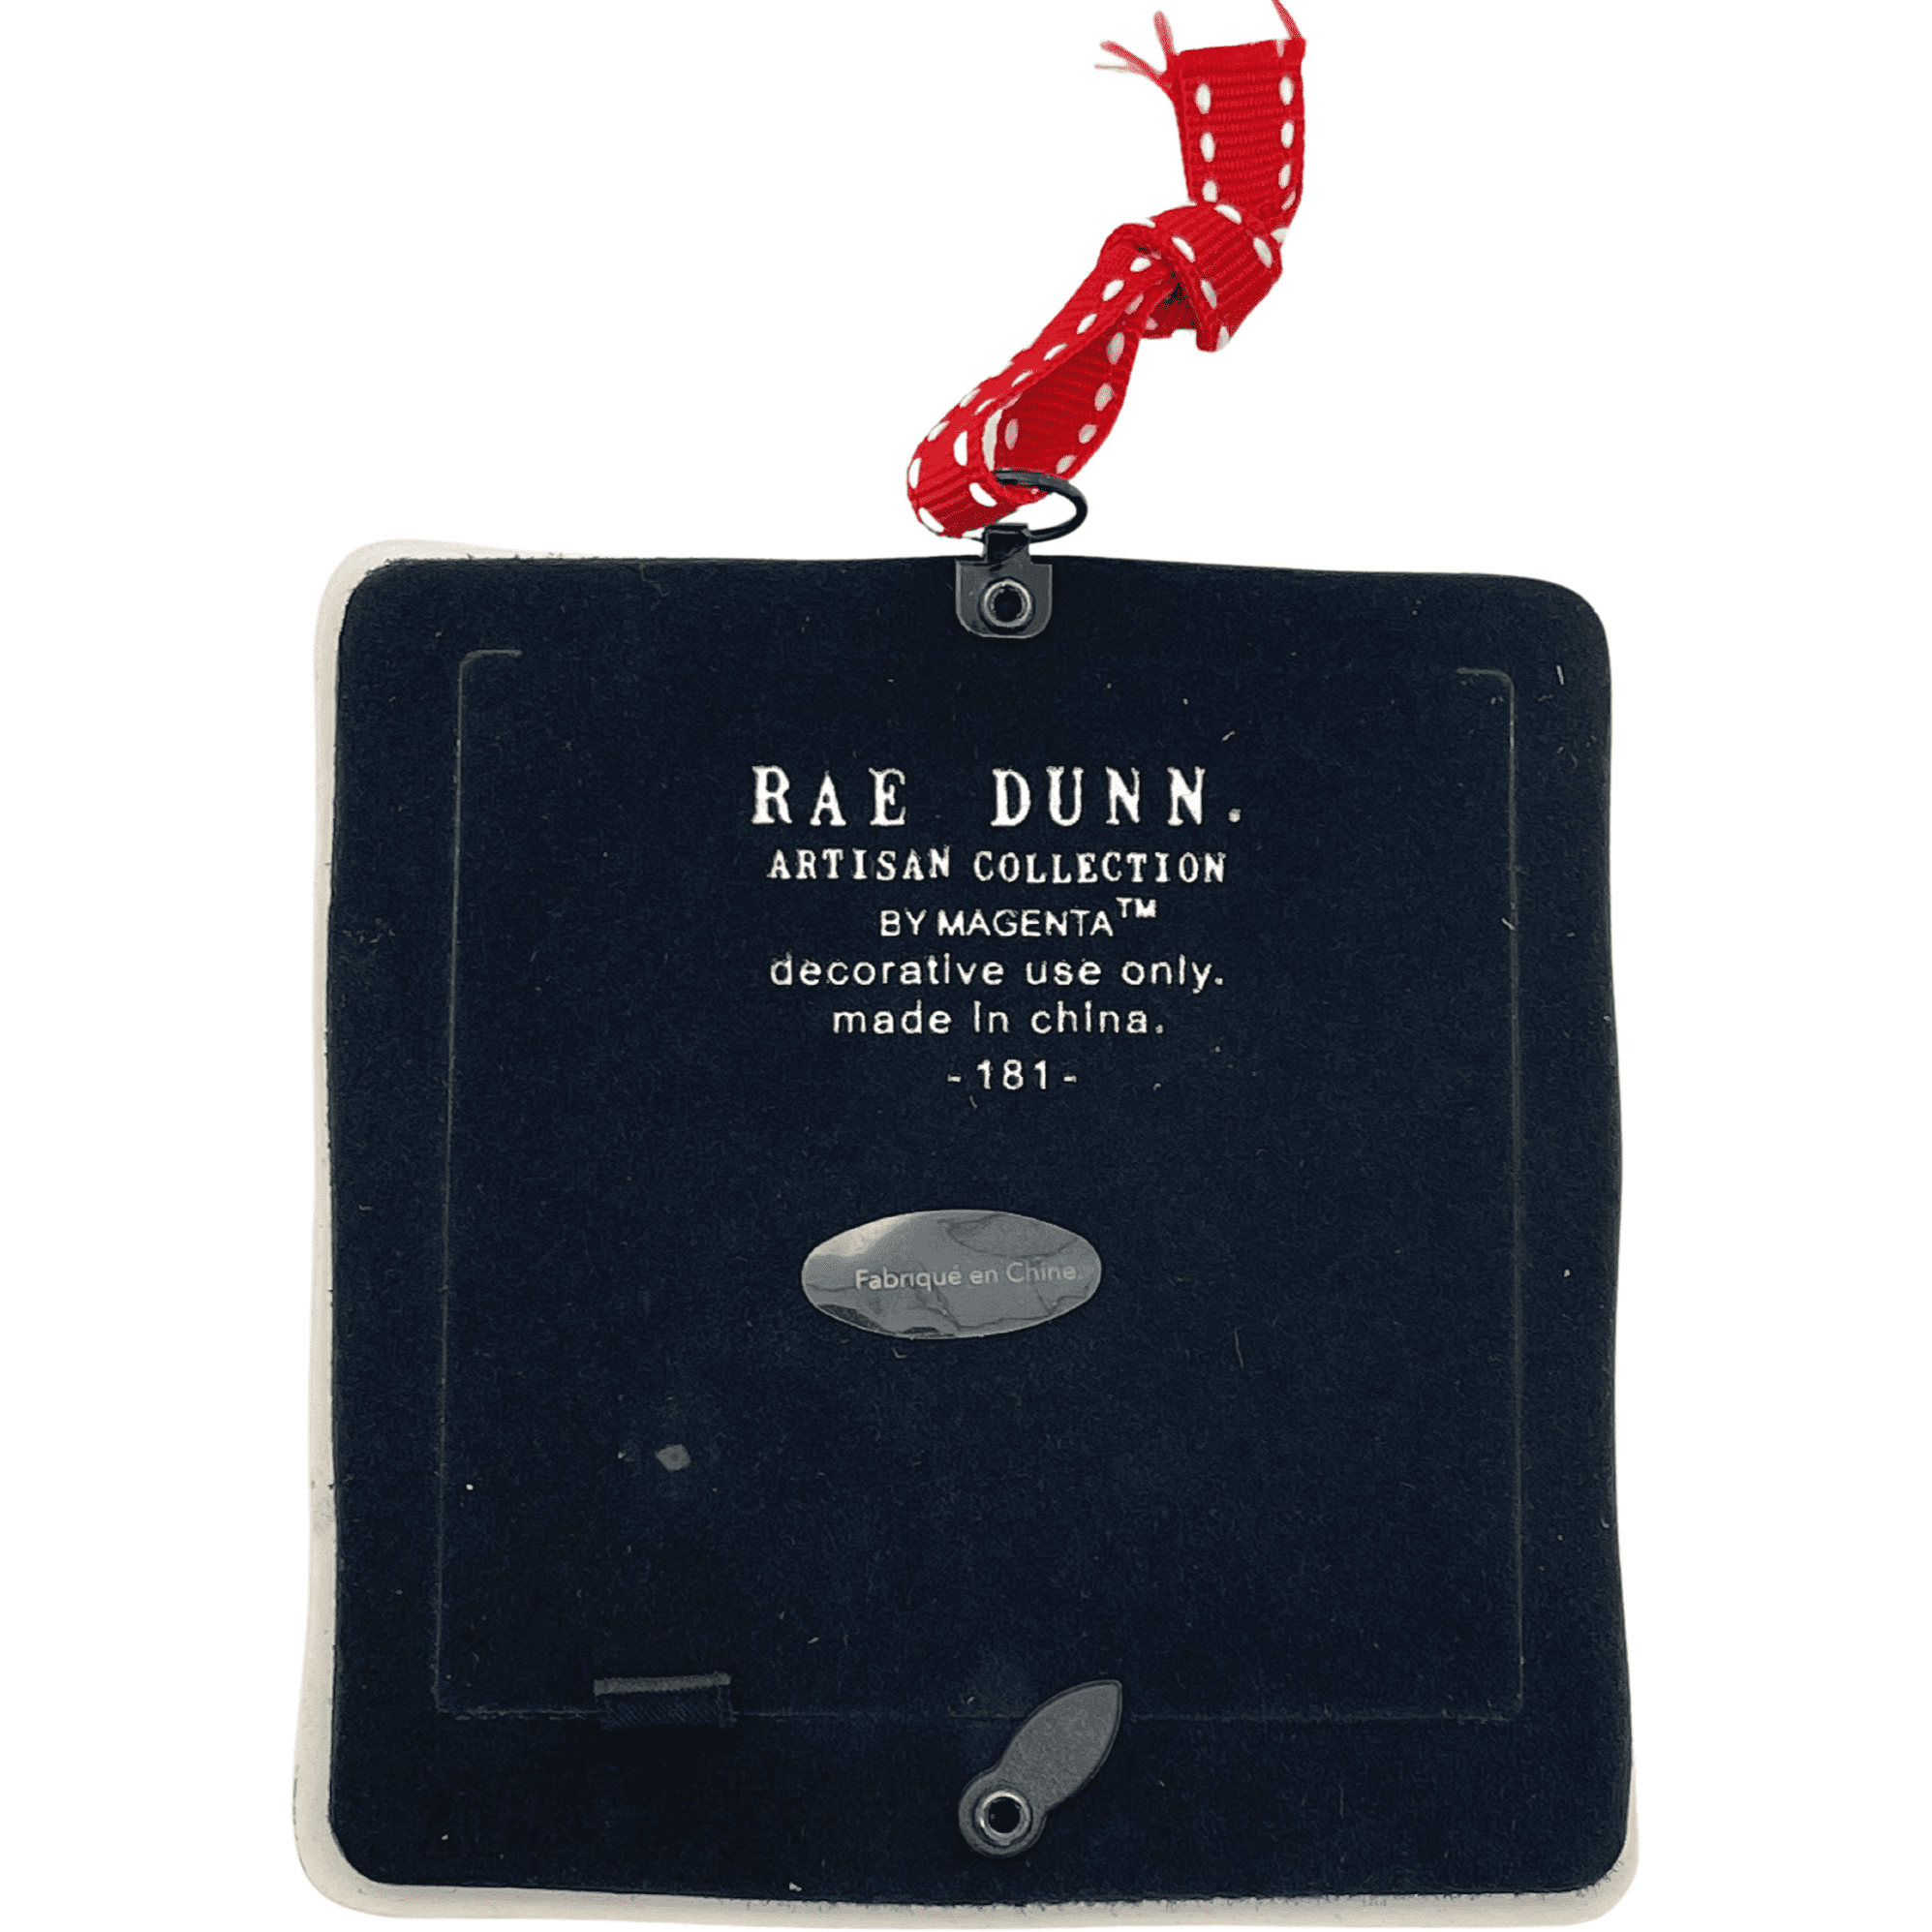 Rae Dunn "Tis The Season" Christmas Ornament / White & Red / Customizable Christmas Ornament / Picture Fame Ornament